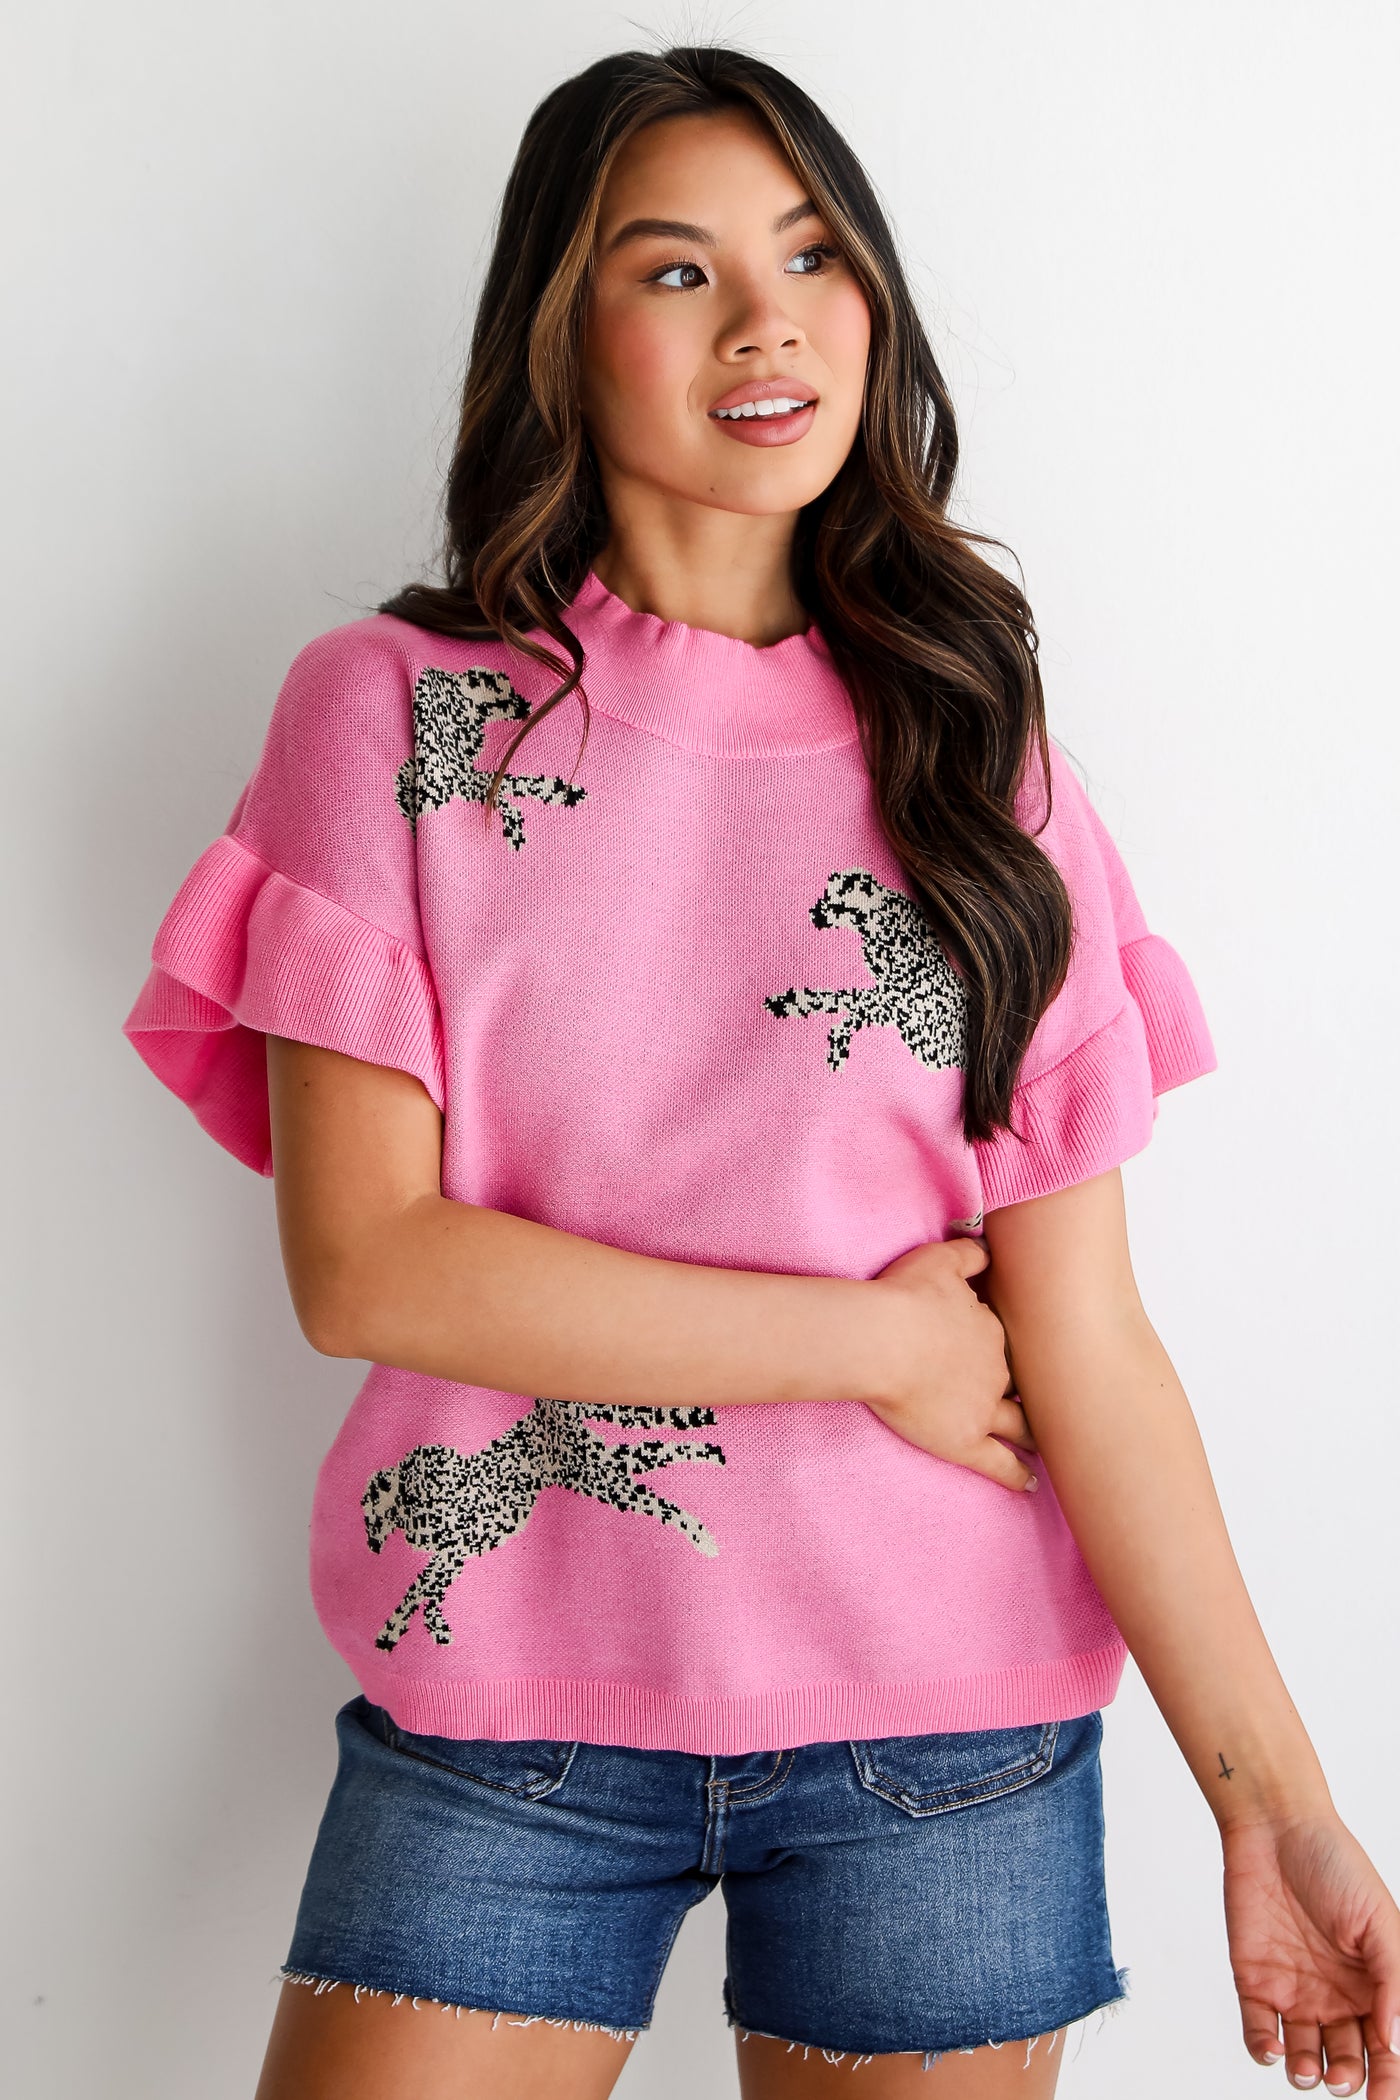 cute Pink Cheetah Sweater Top for women